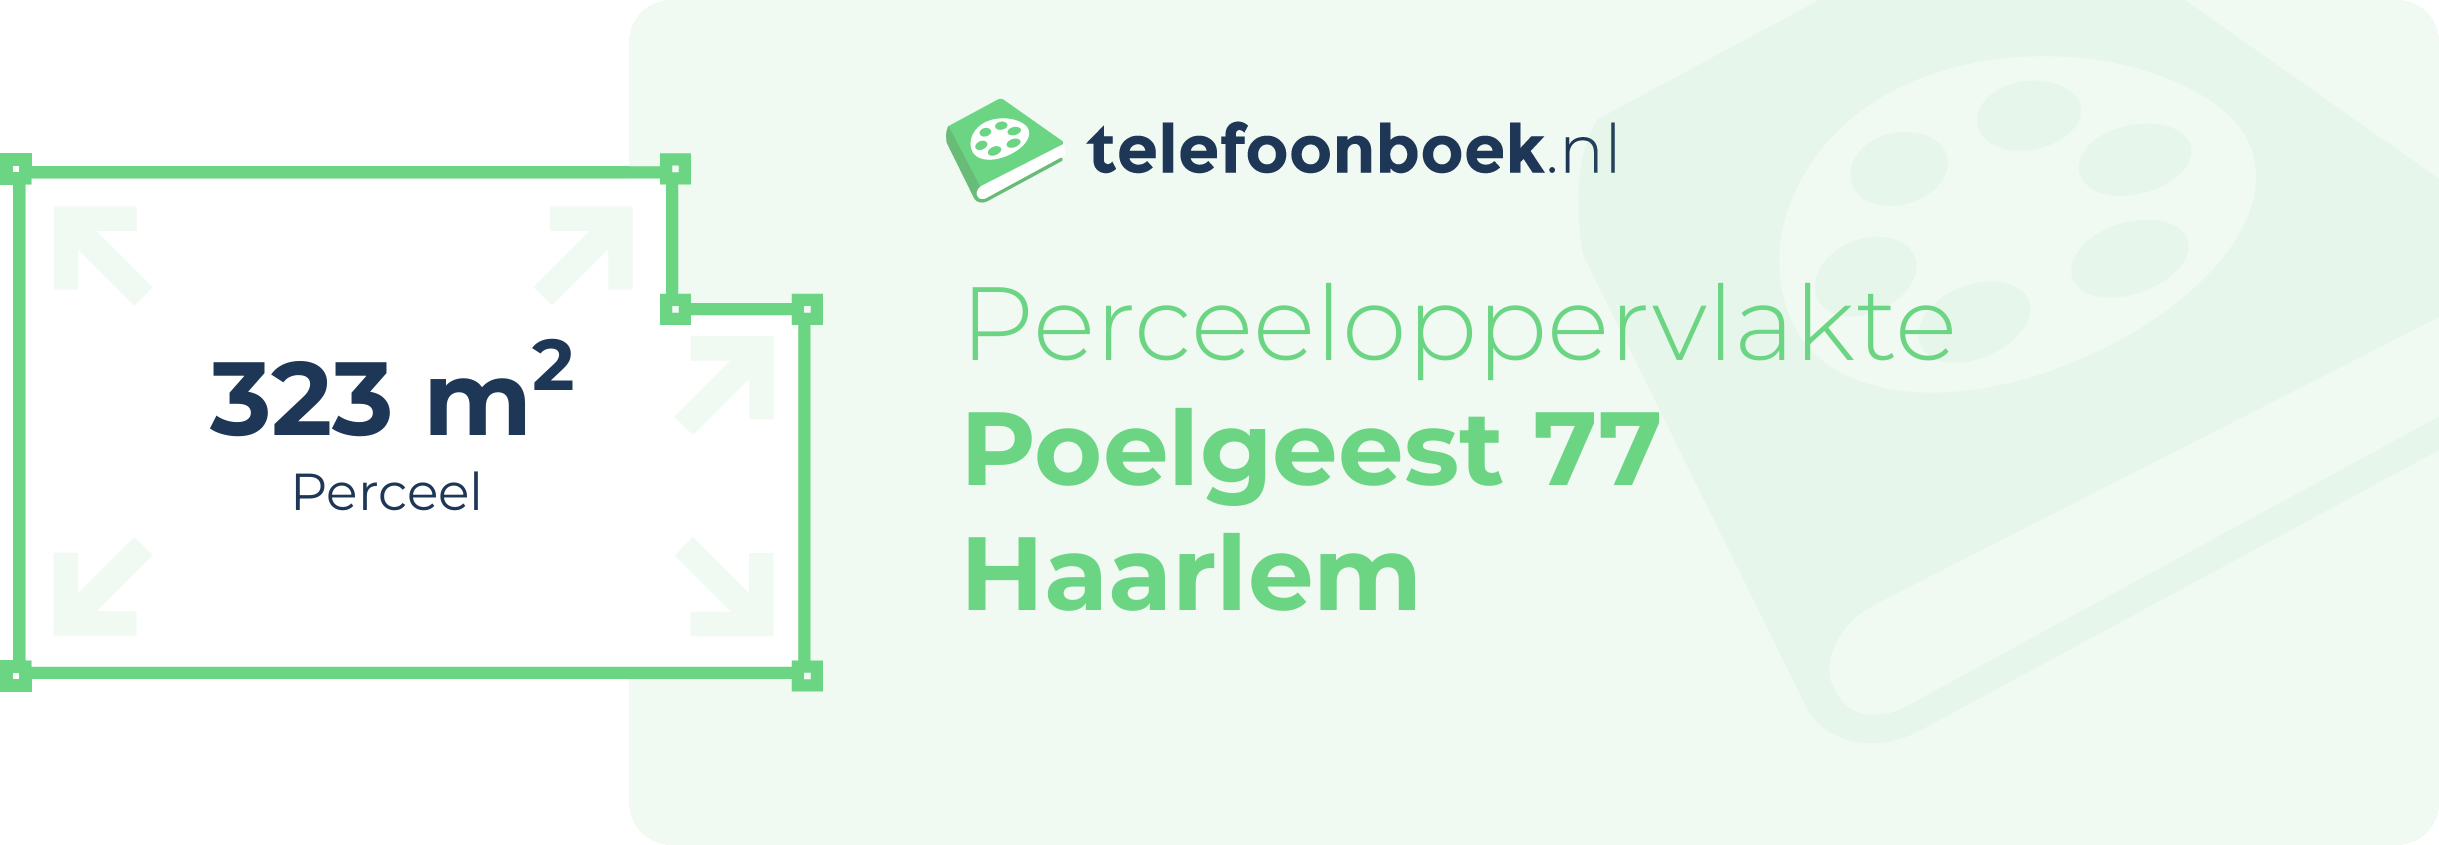 Perceeloppervlakte Poelgeest 77 Haarlem